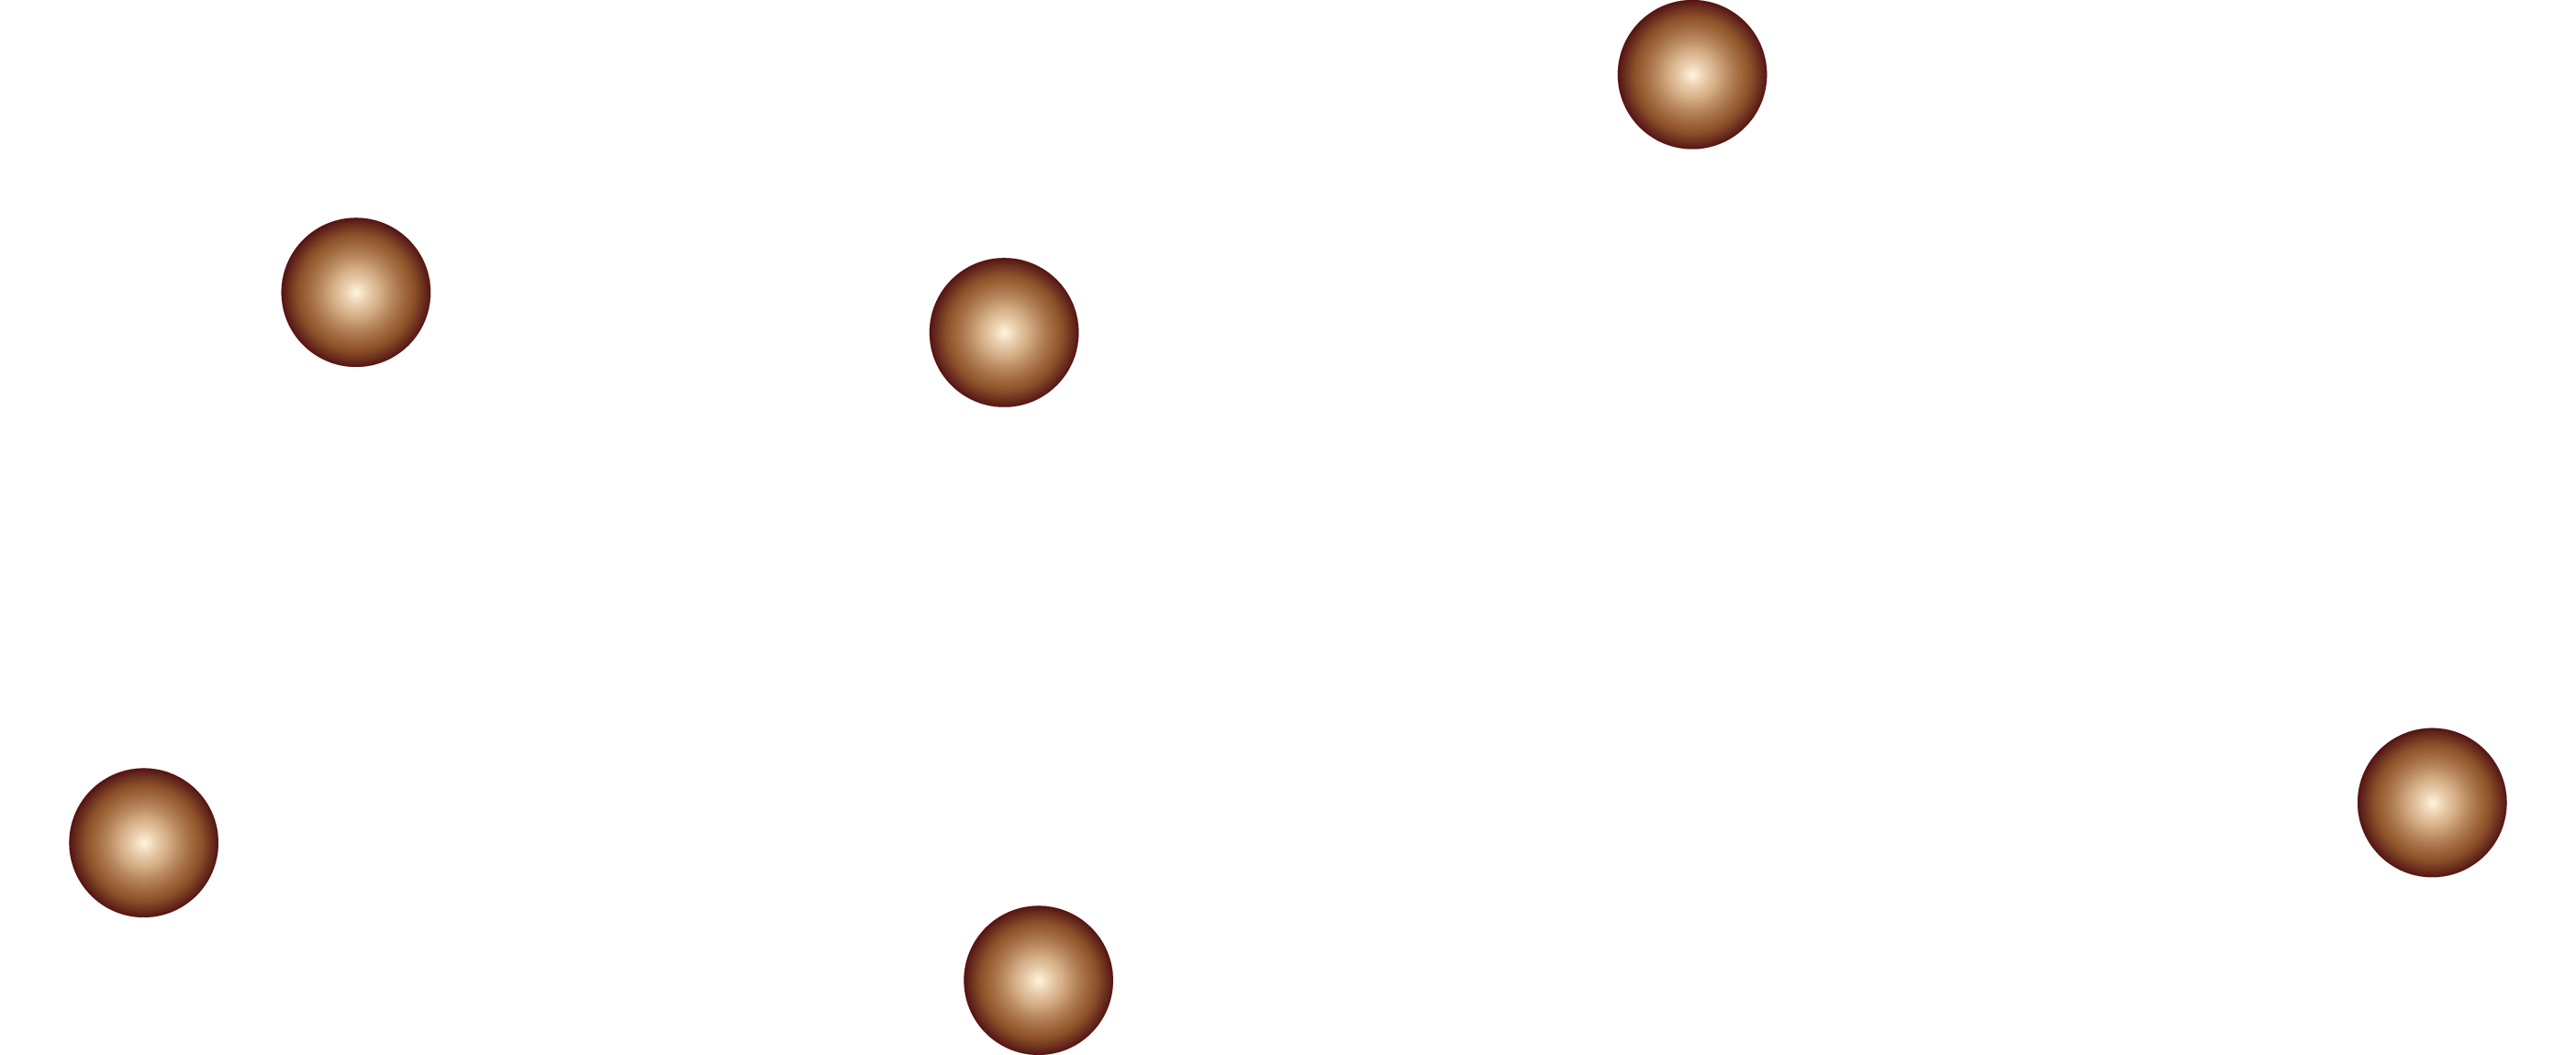 The Napier Network